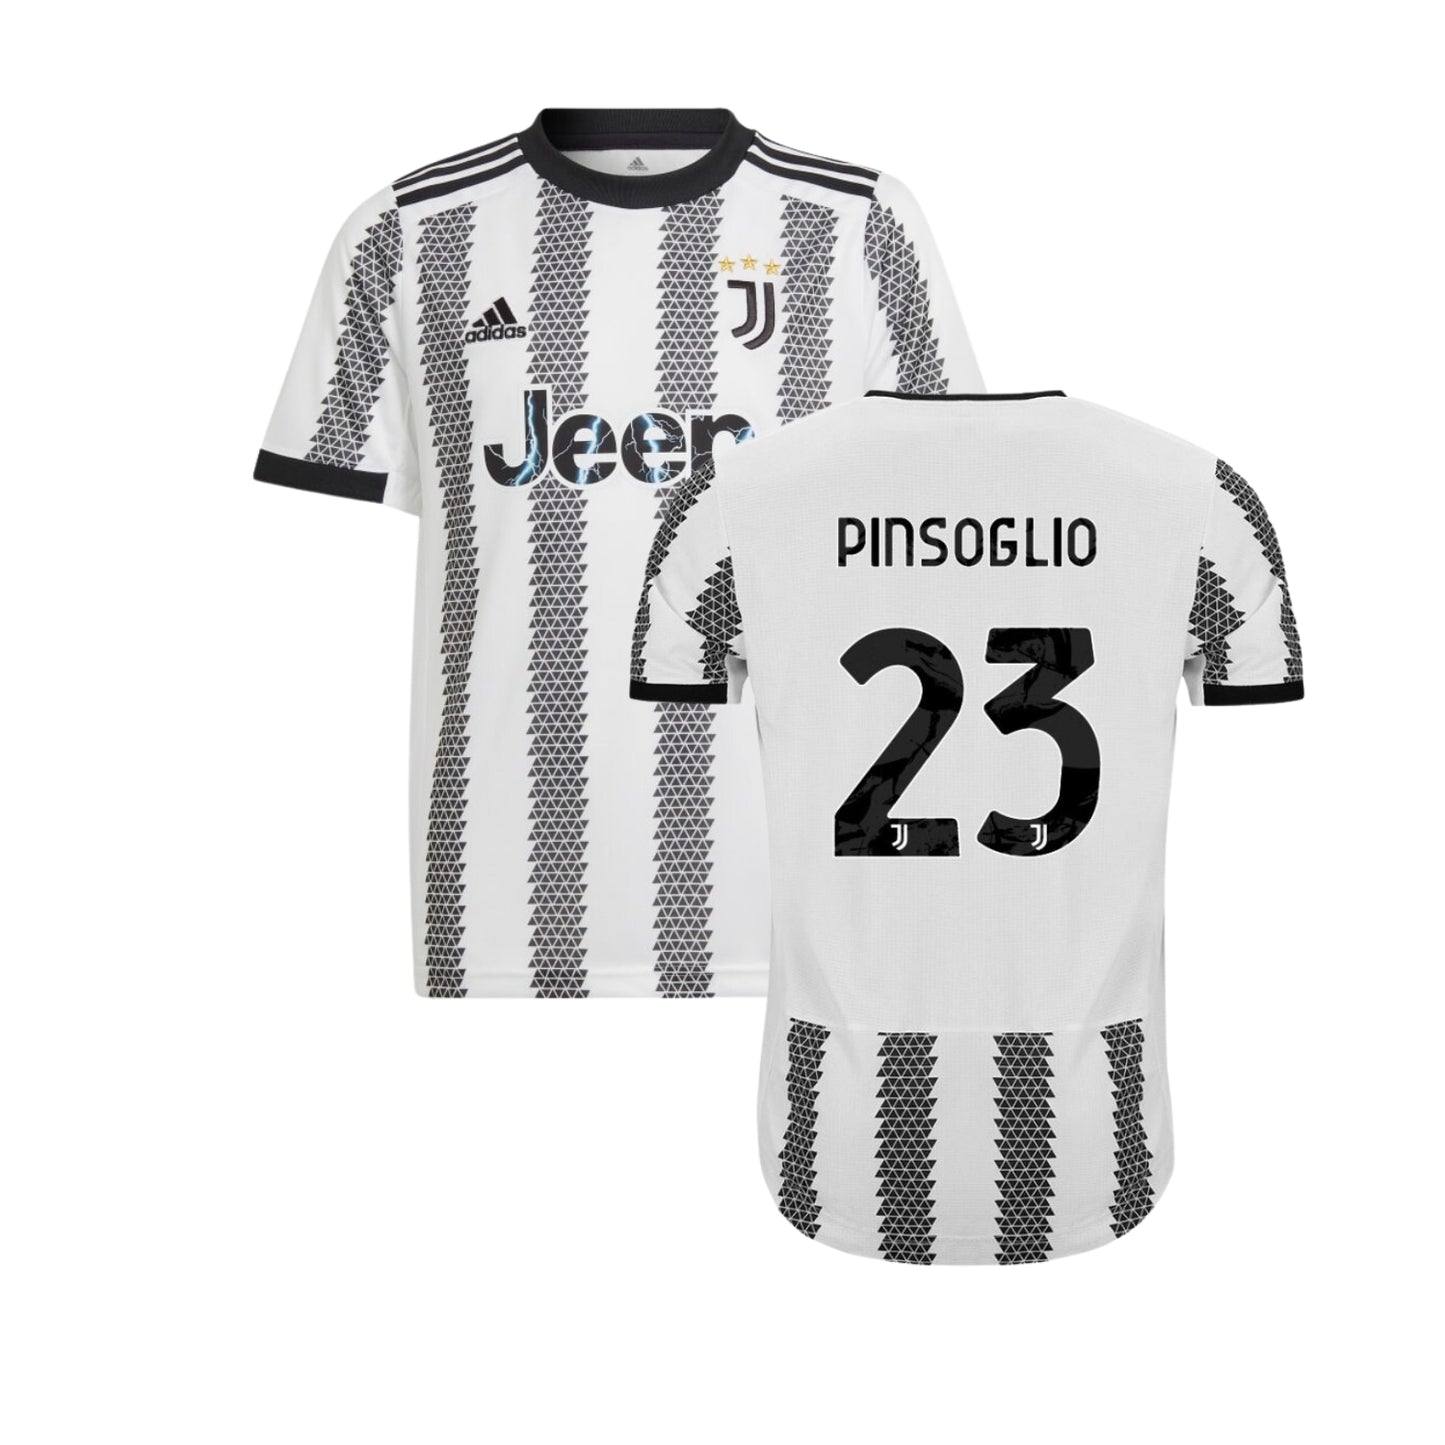 Carlo Pinsoglio Juventus 23 Jersey